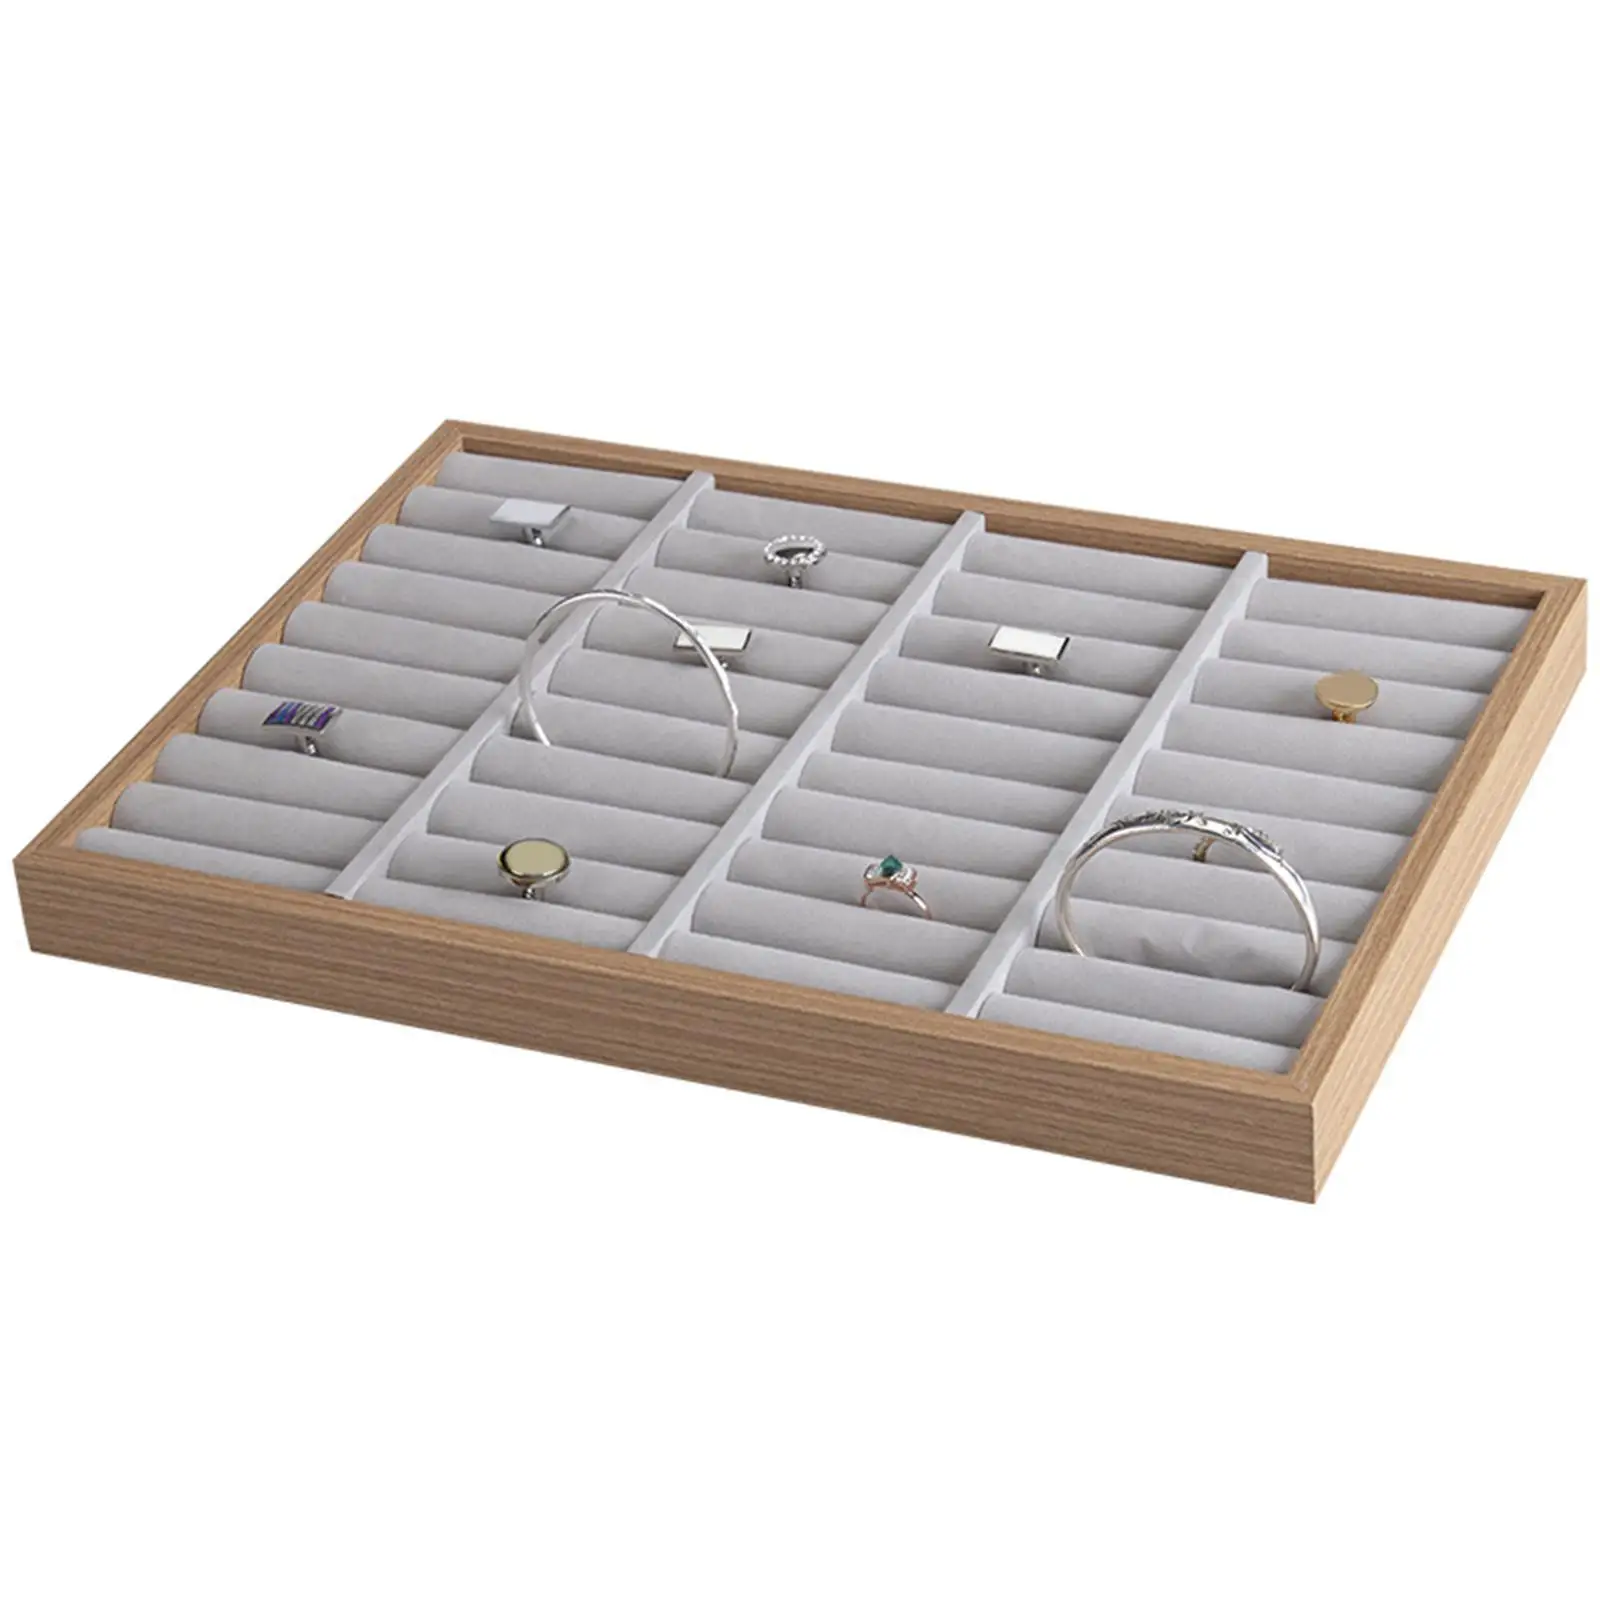 Portable Jewelry Display Tray Bracelet Display Case Storage Organization Display Holder